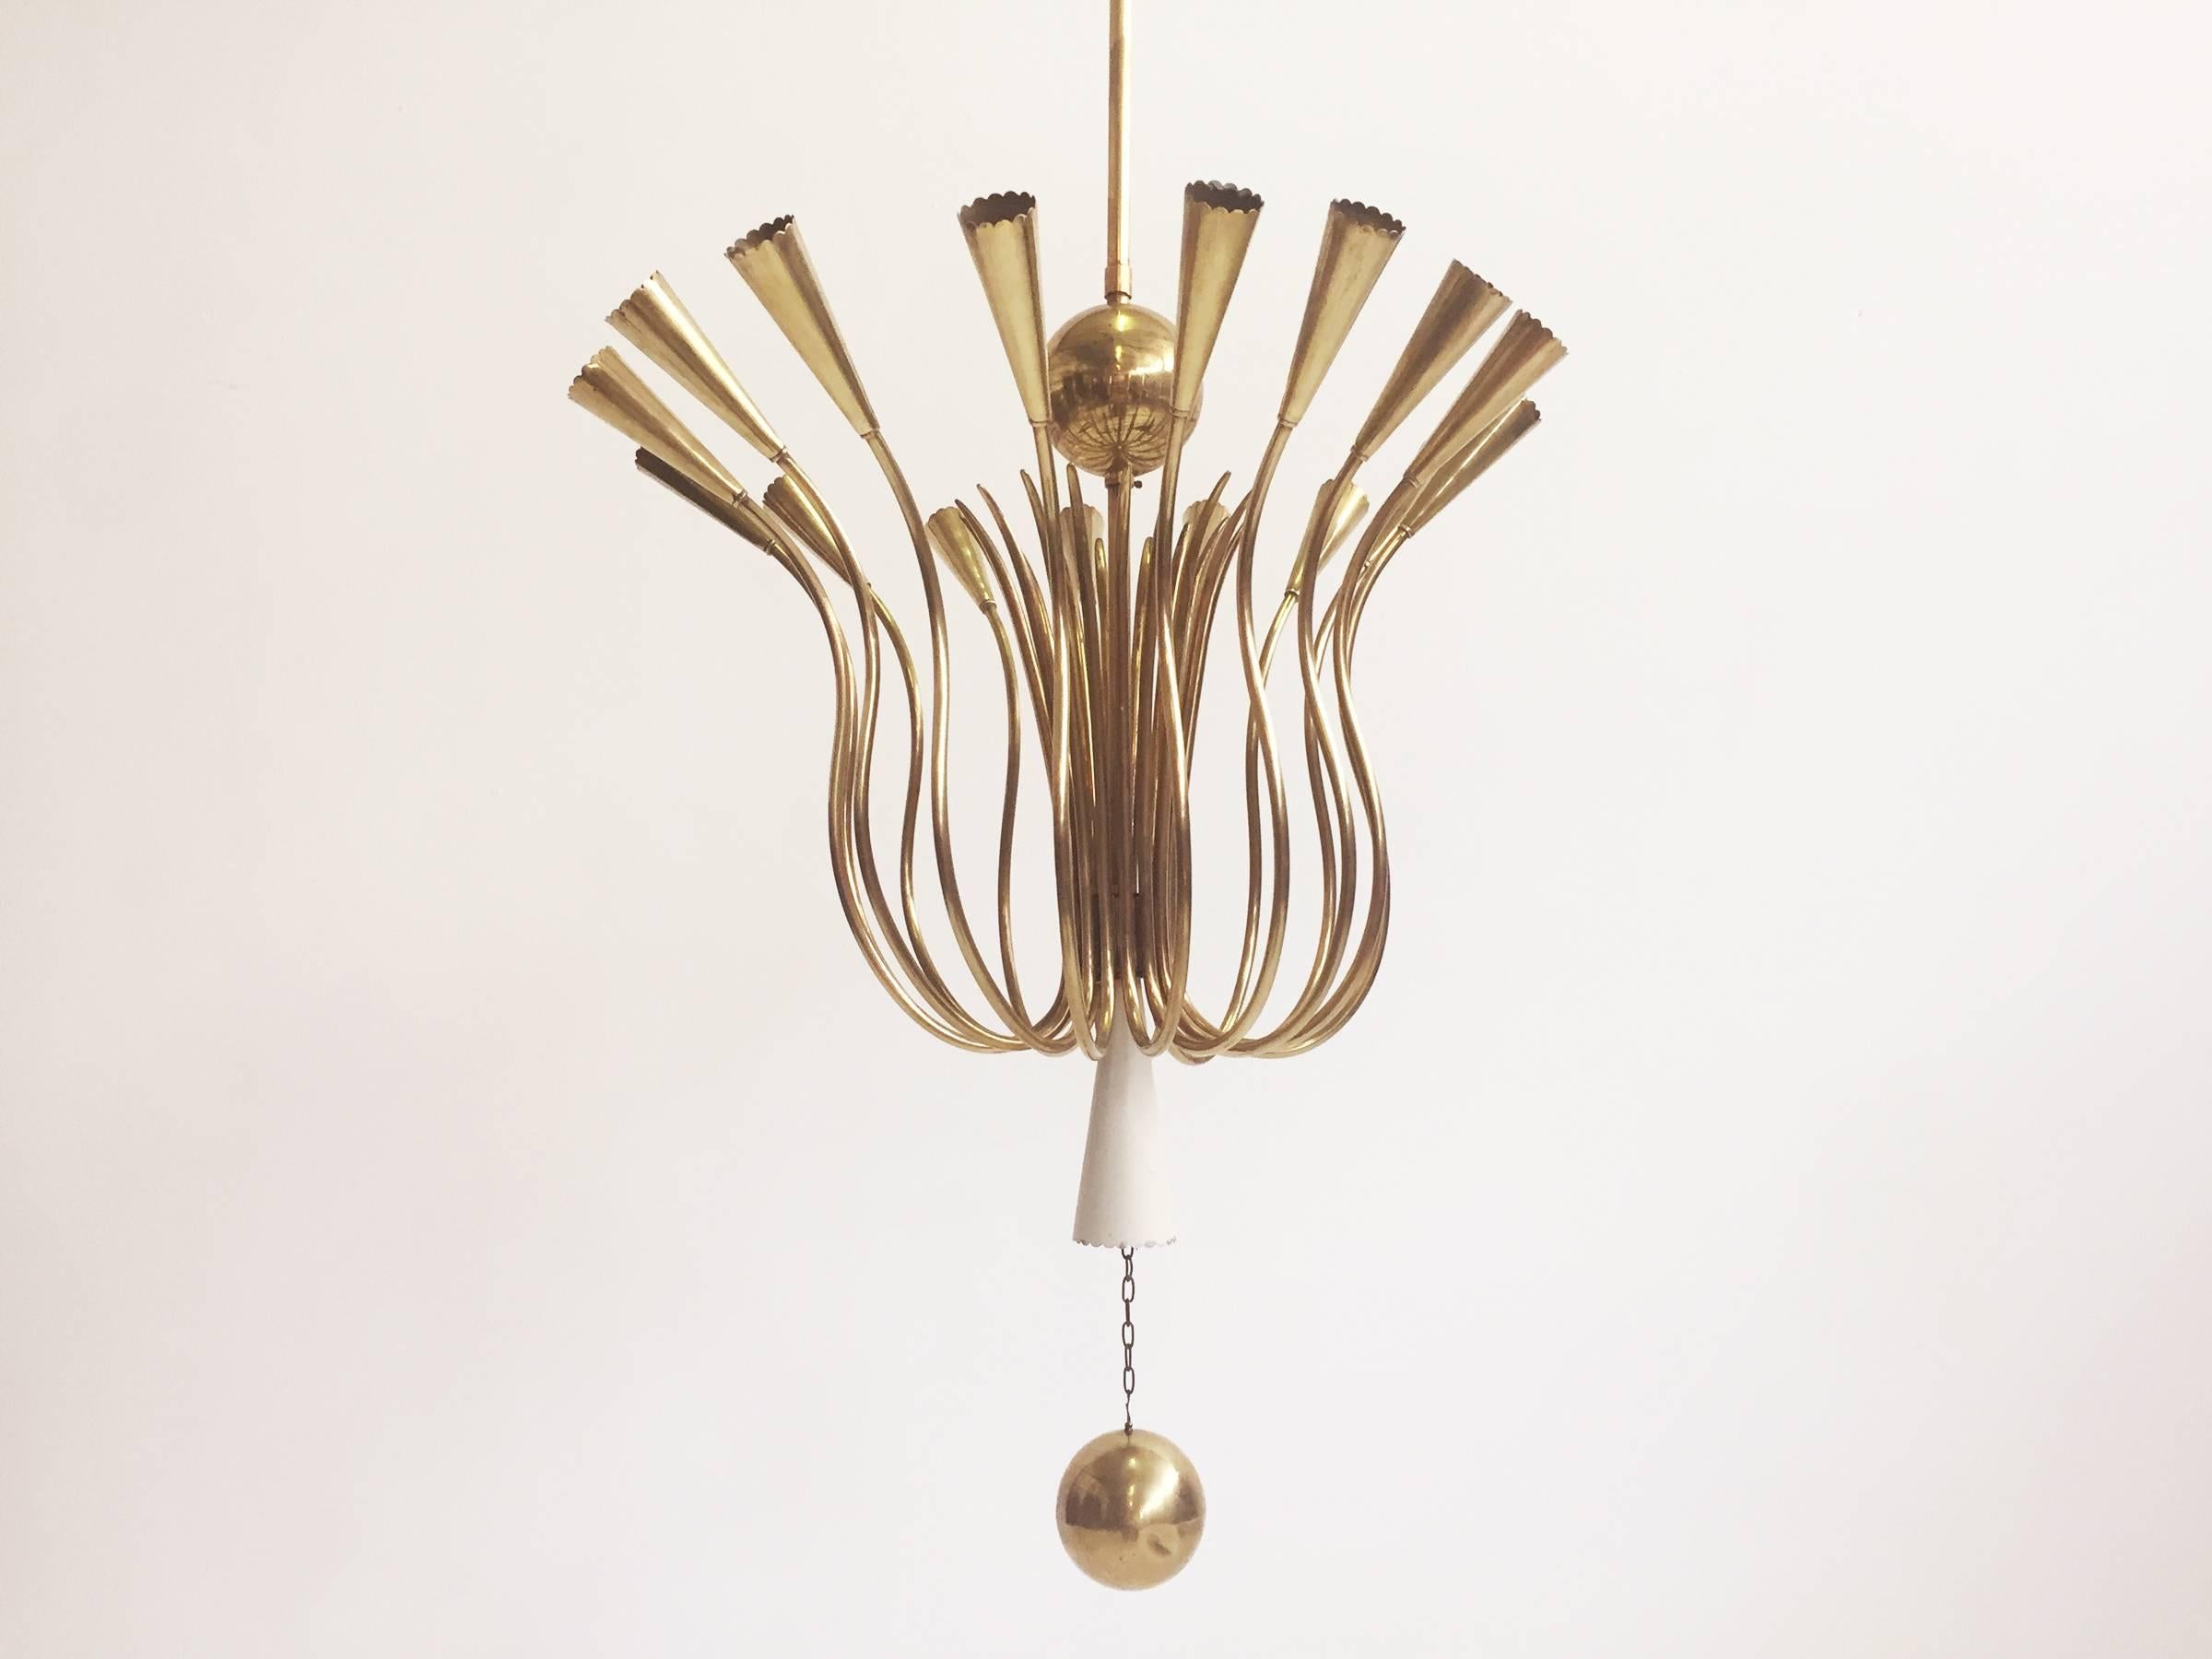 Stunning chandelier with pendant brass bowl
Attributed to Stilnovo.